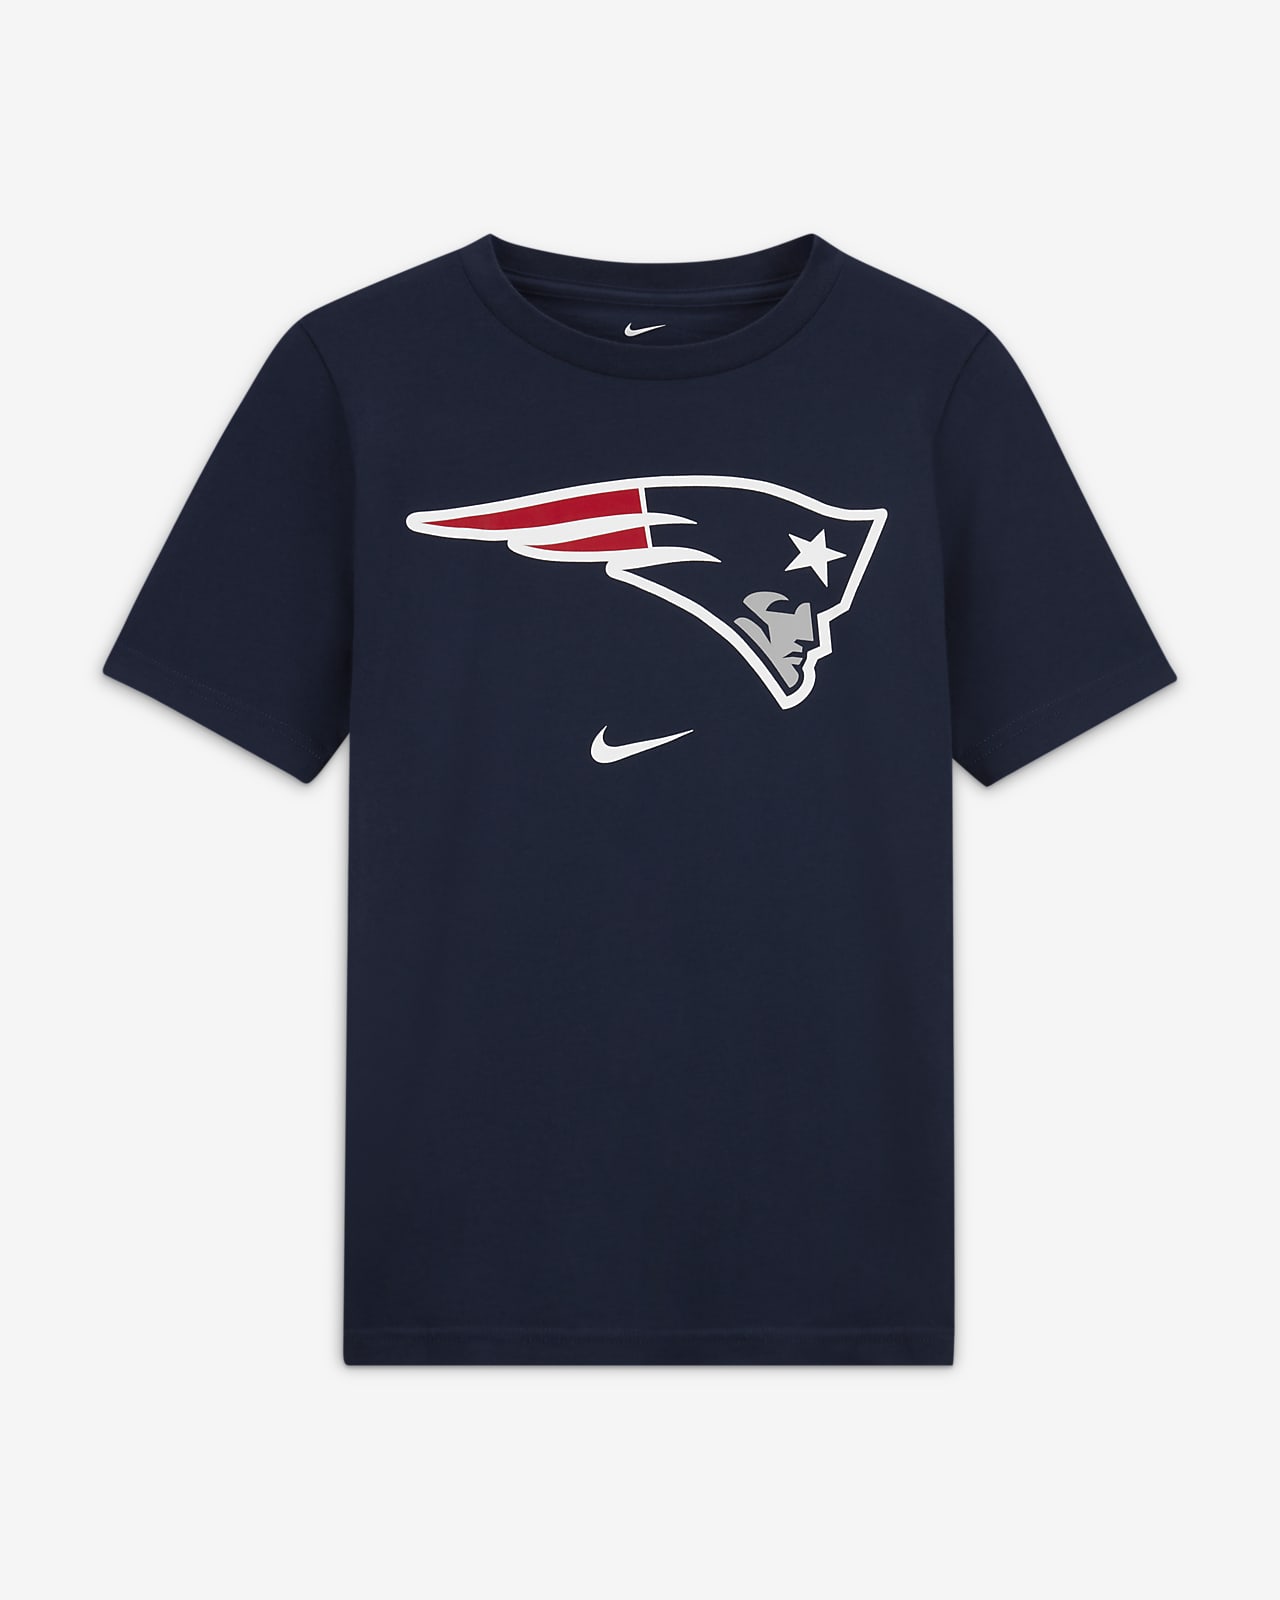 Nike (NFL New England Patriots) T-Shirt für ältere Kinder